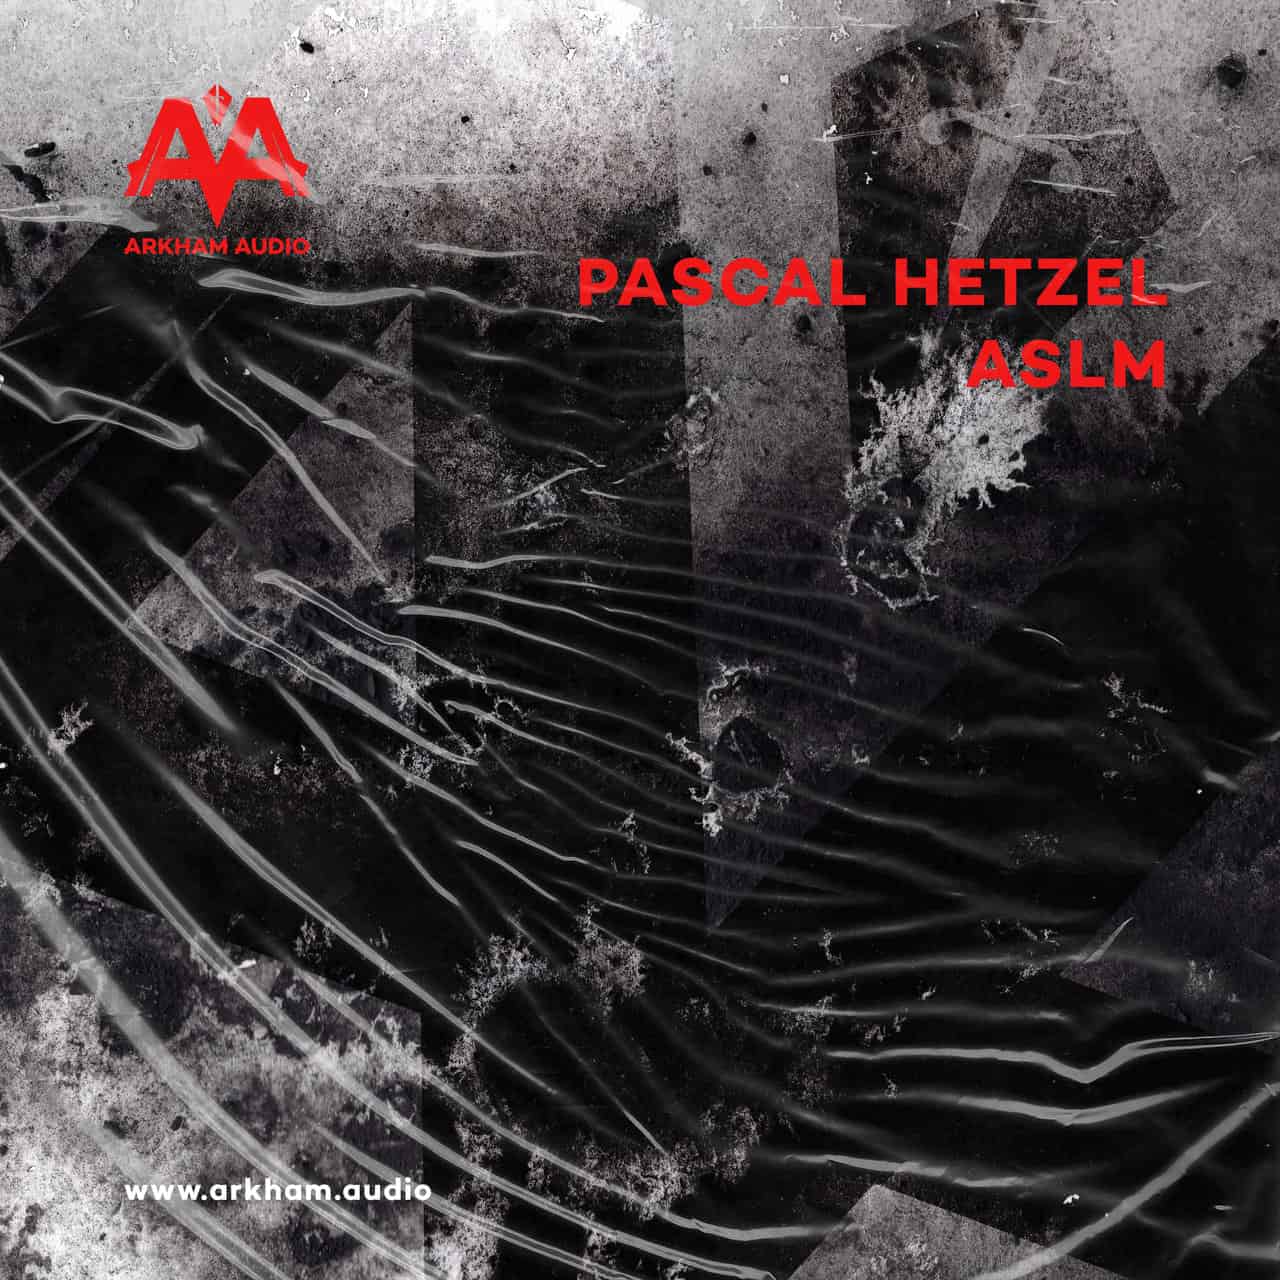 image cover: Pascal Hetzel - ASLM